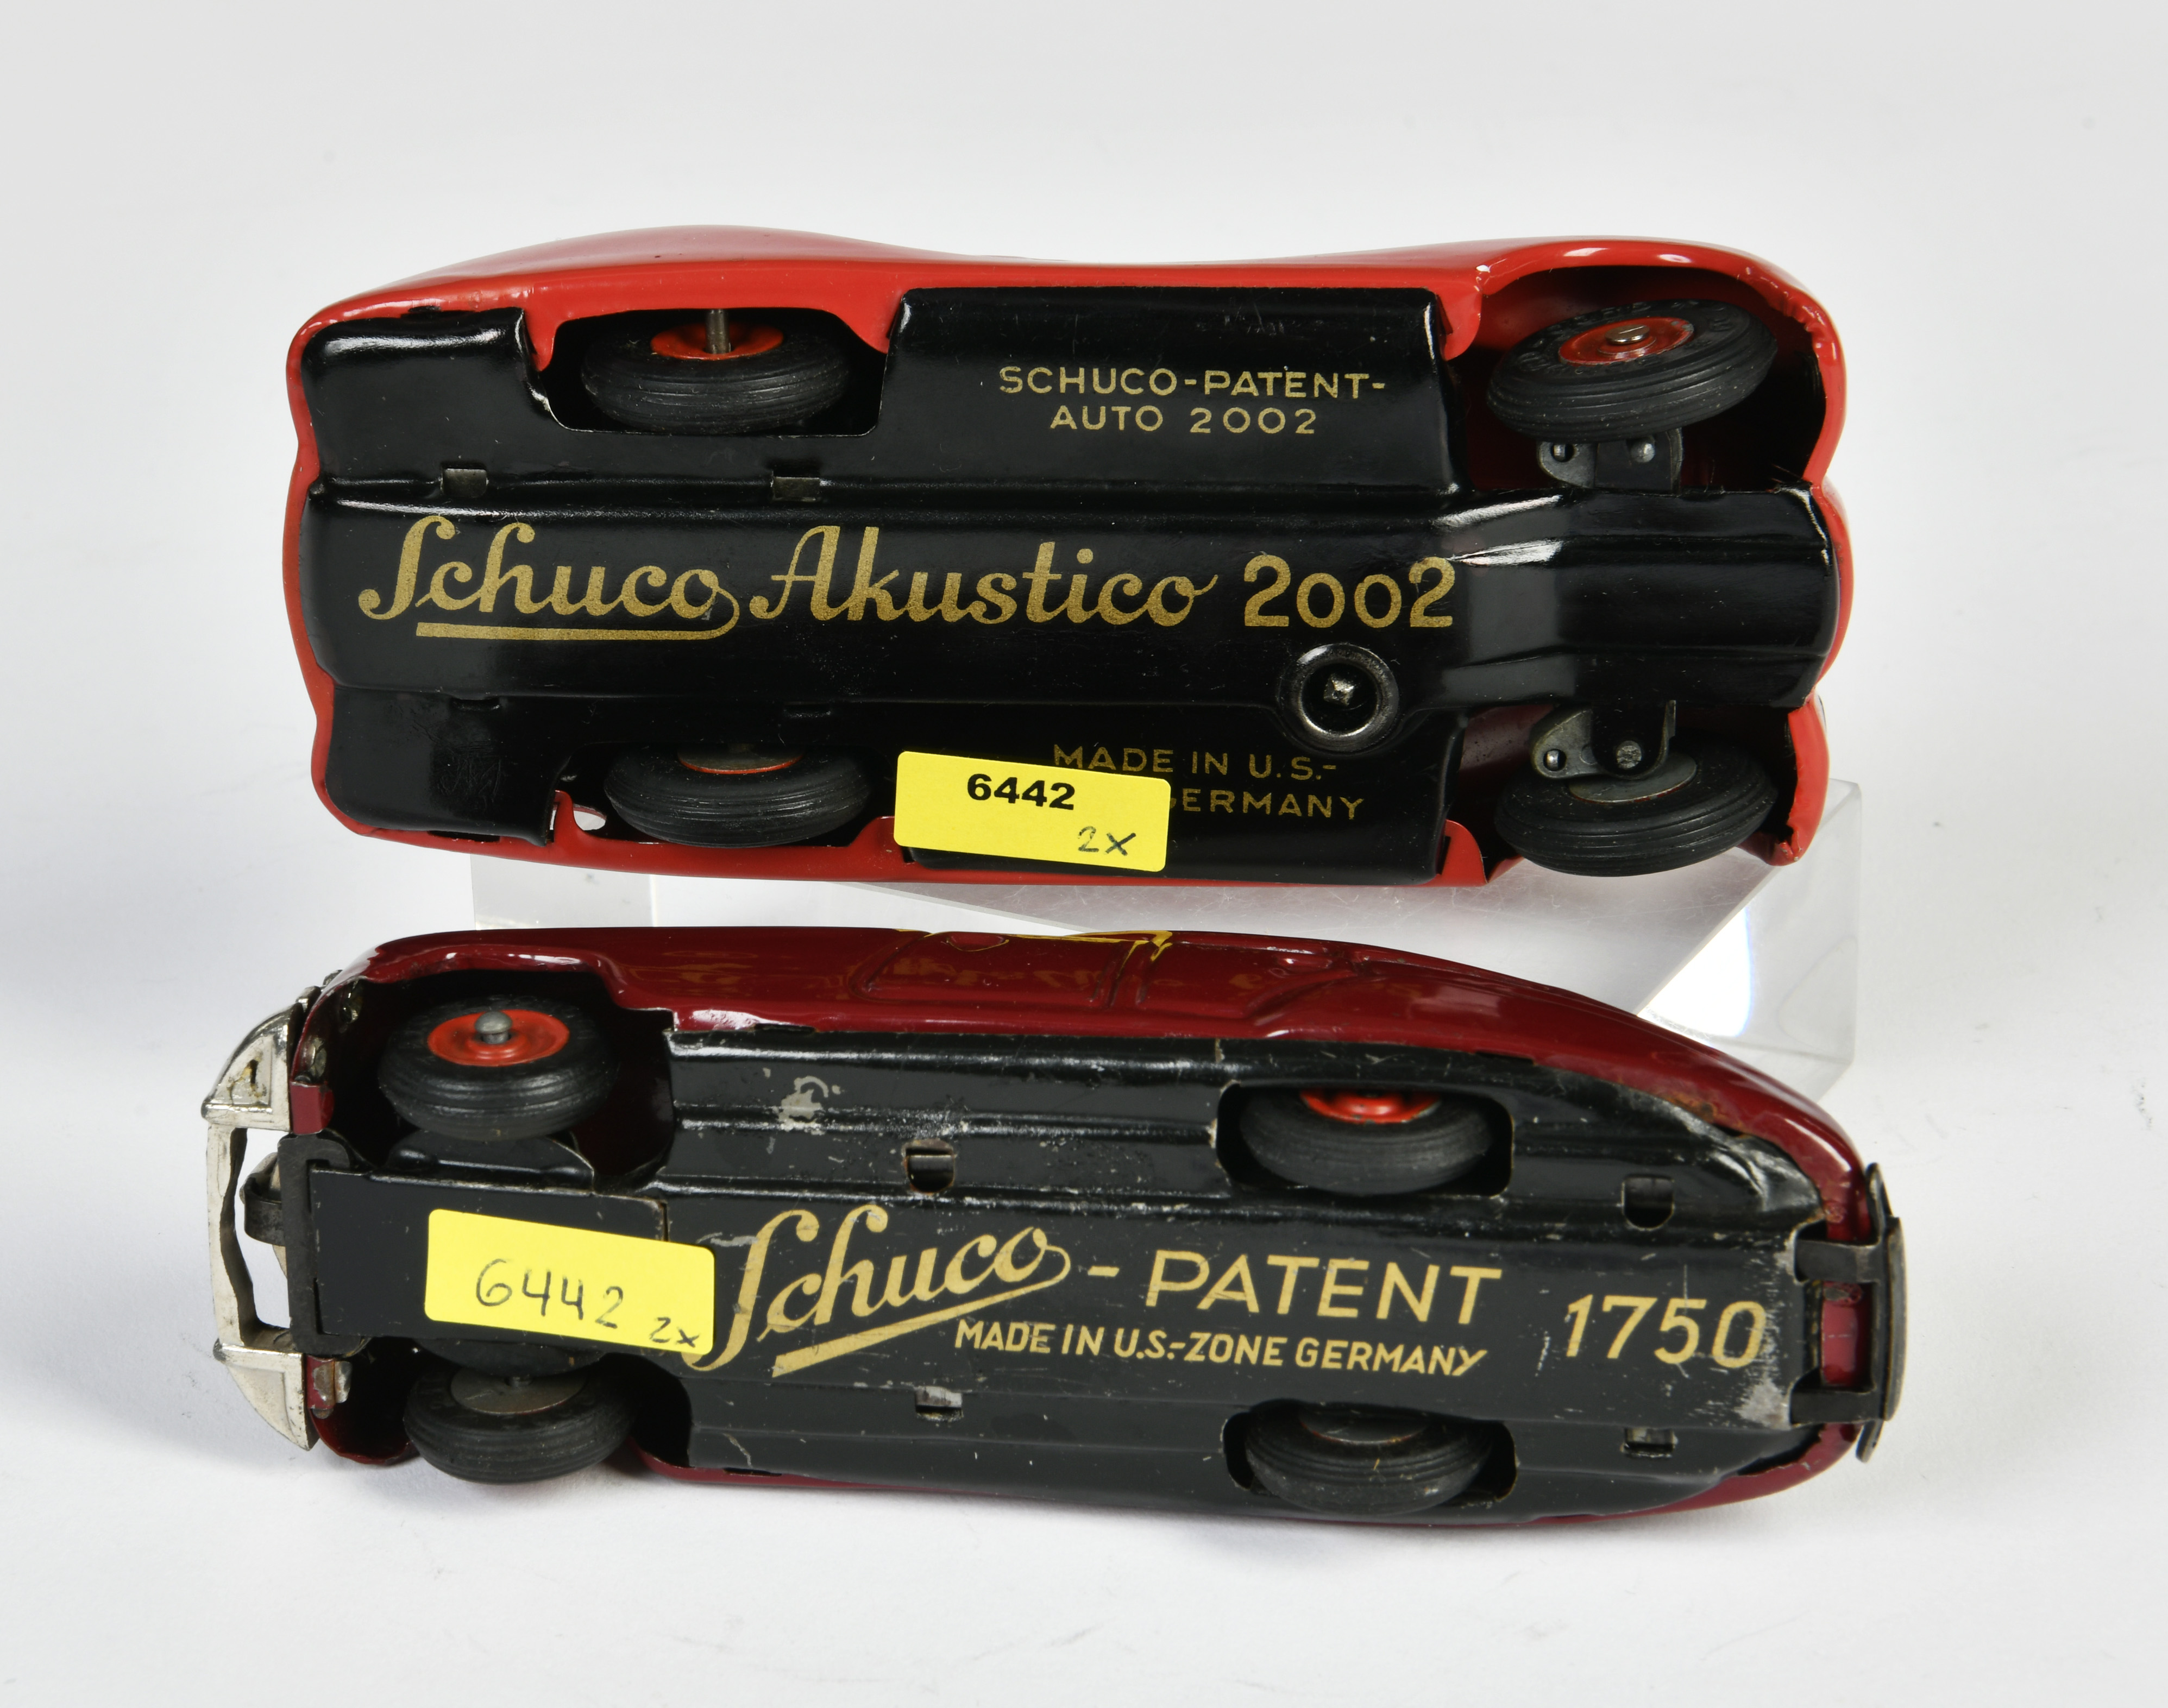 Schuco, Patentauto 1750 & Akustico 2002, US Z.-Germany, tin, cw ok, min. paint d., C 2+ - Image 3 of 3